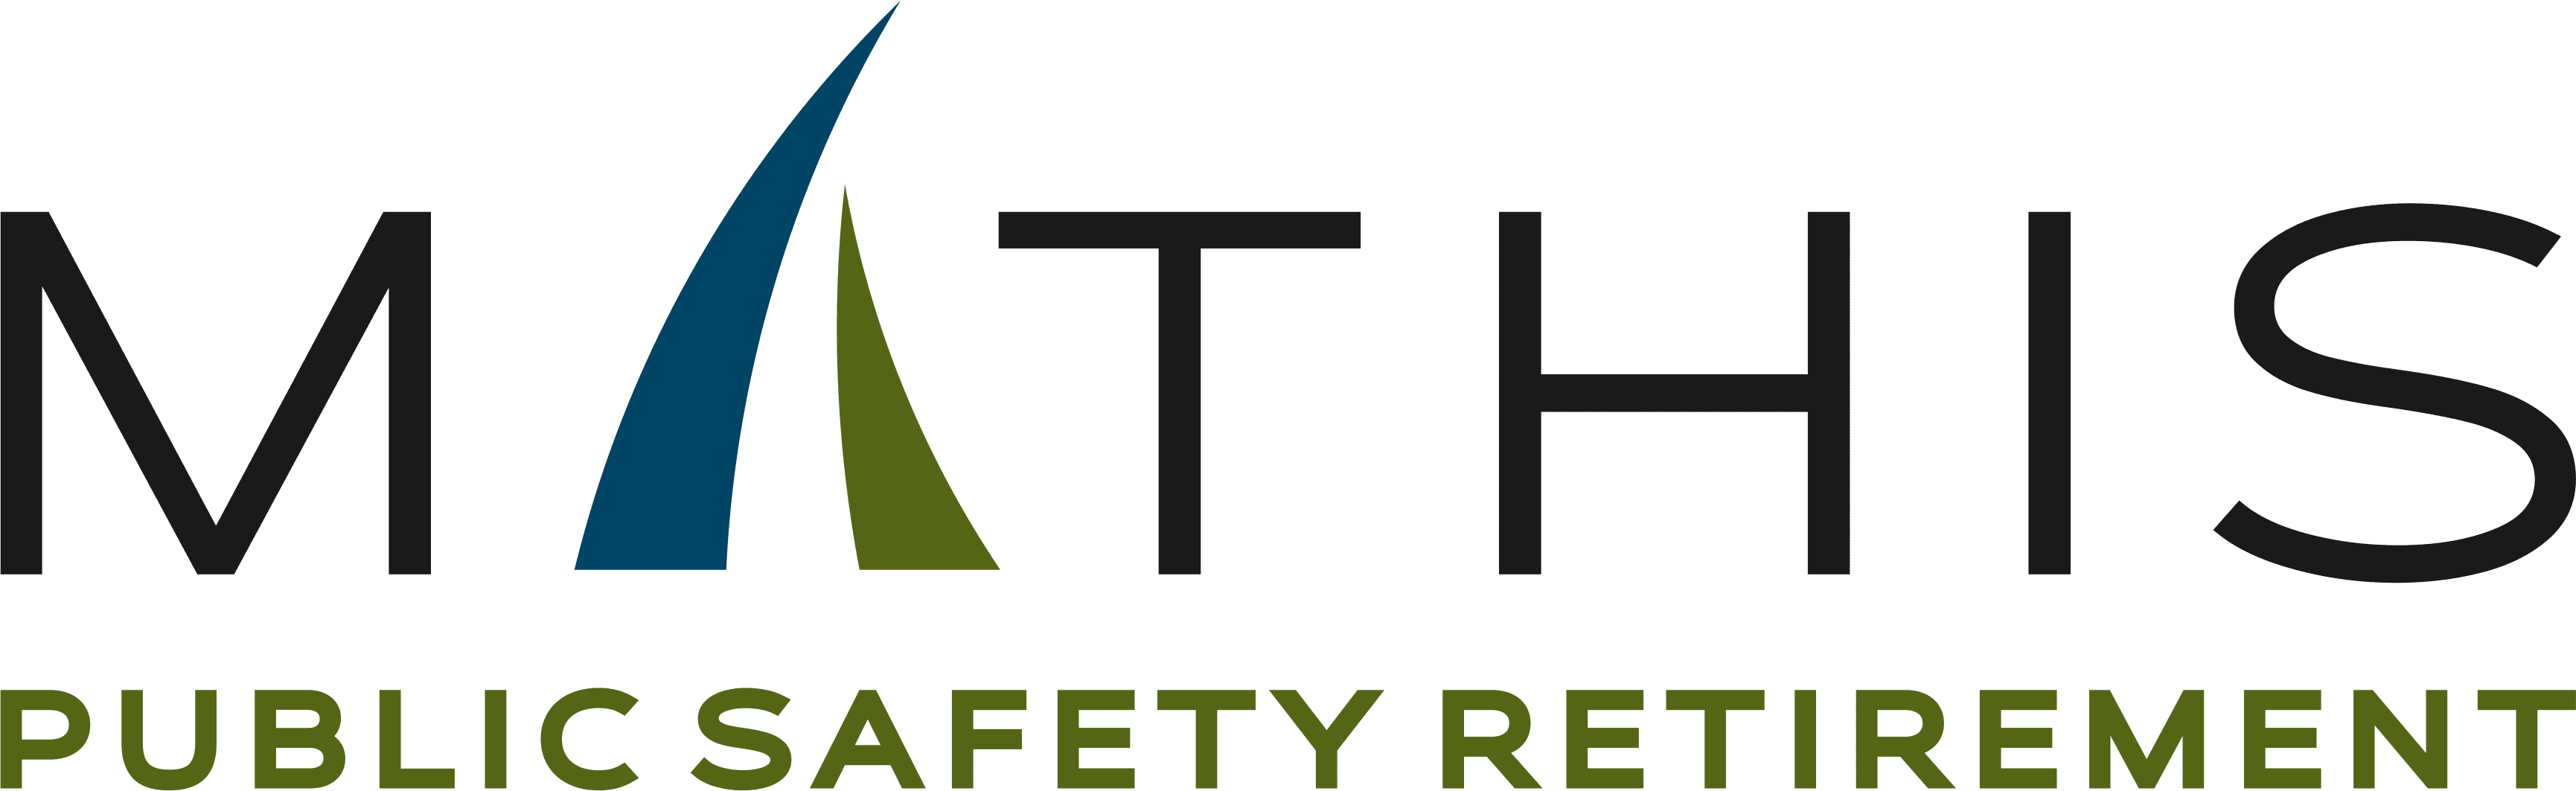 Mathis Public Safety Retirement